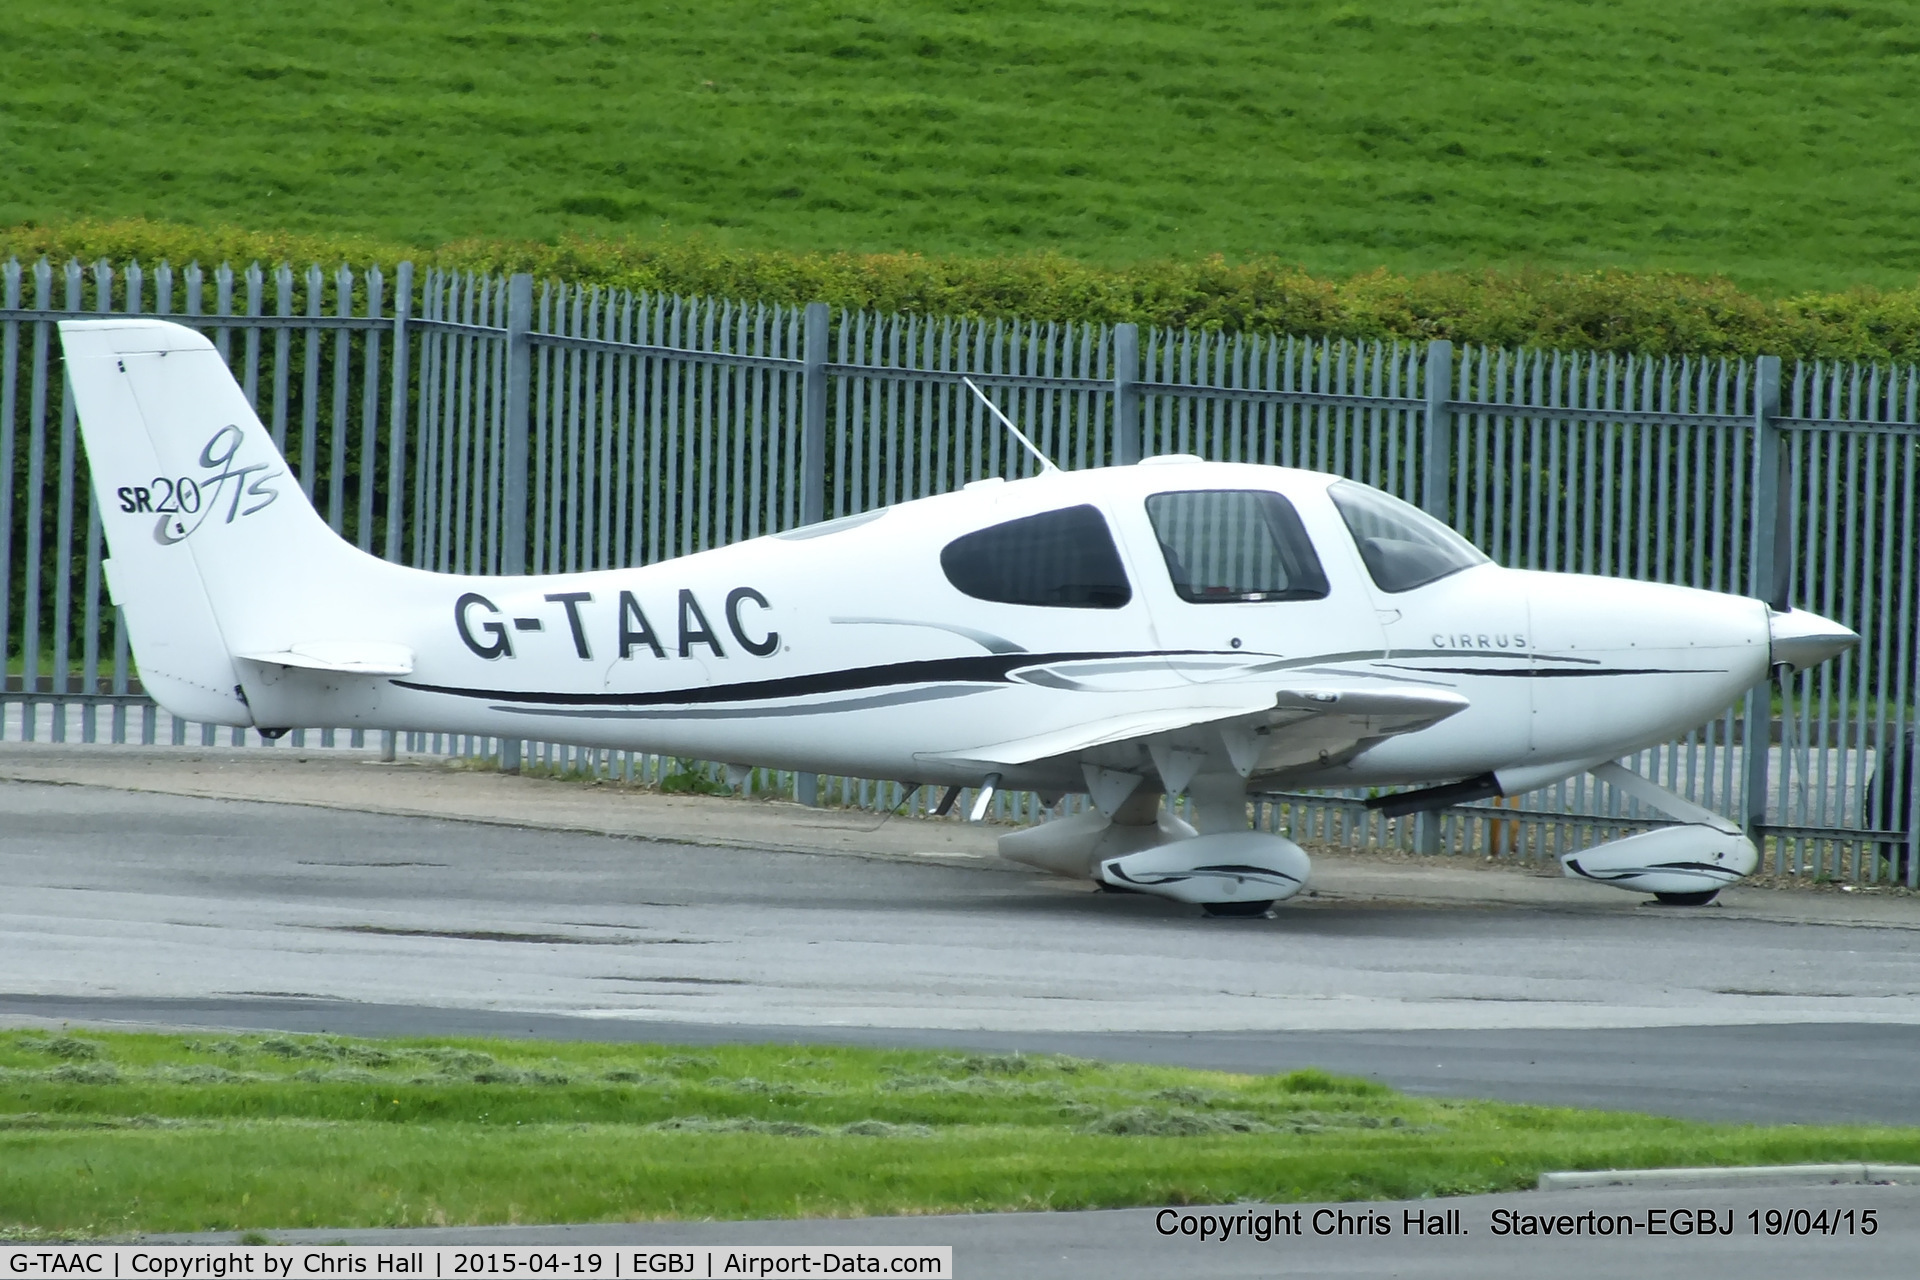 G-TAAC, 2006 Cirrus SR20 GTS C/N 1694, at Staverton